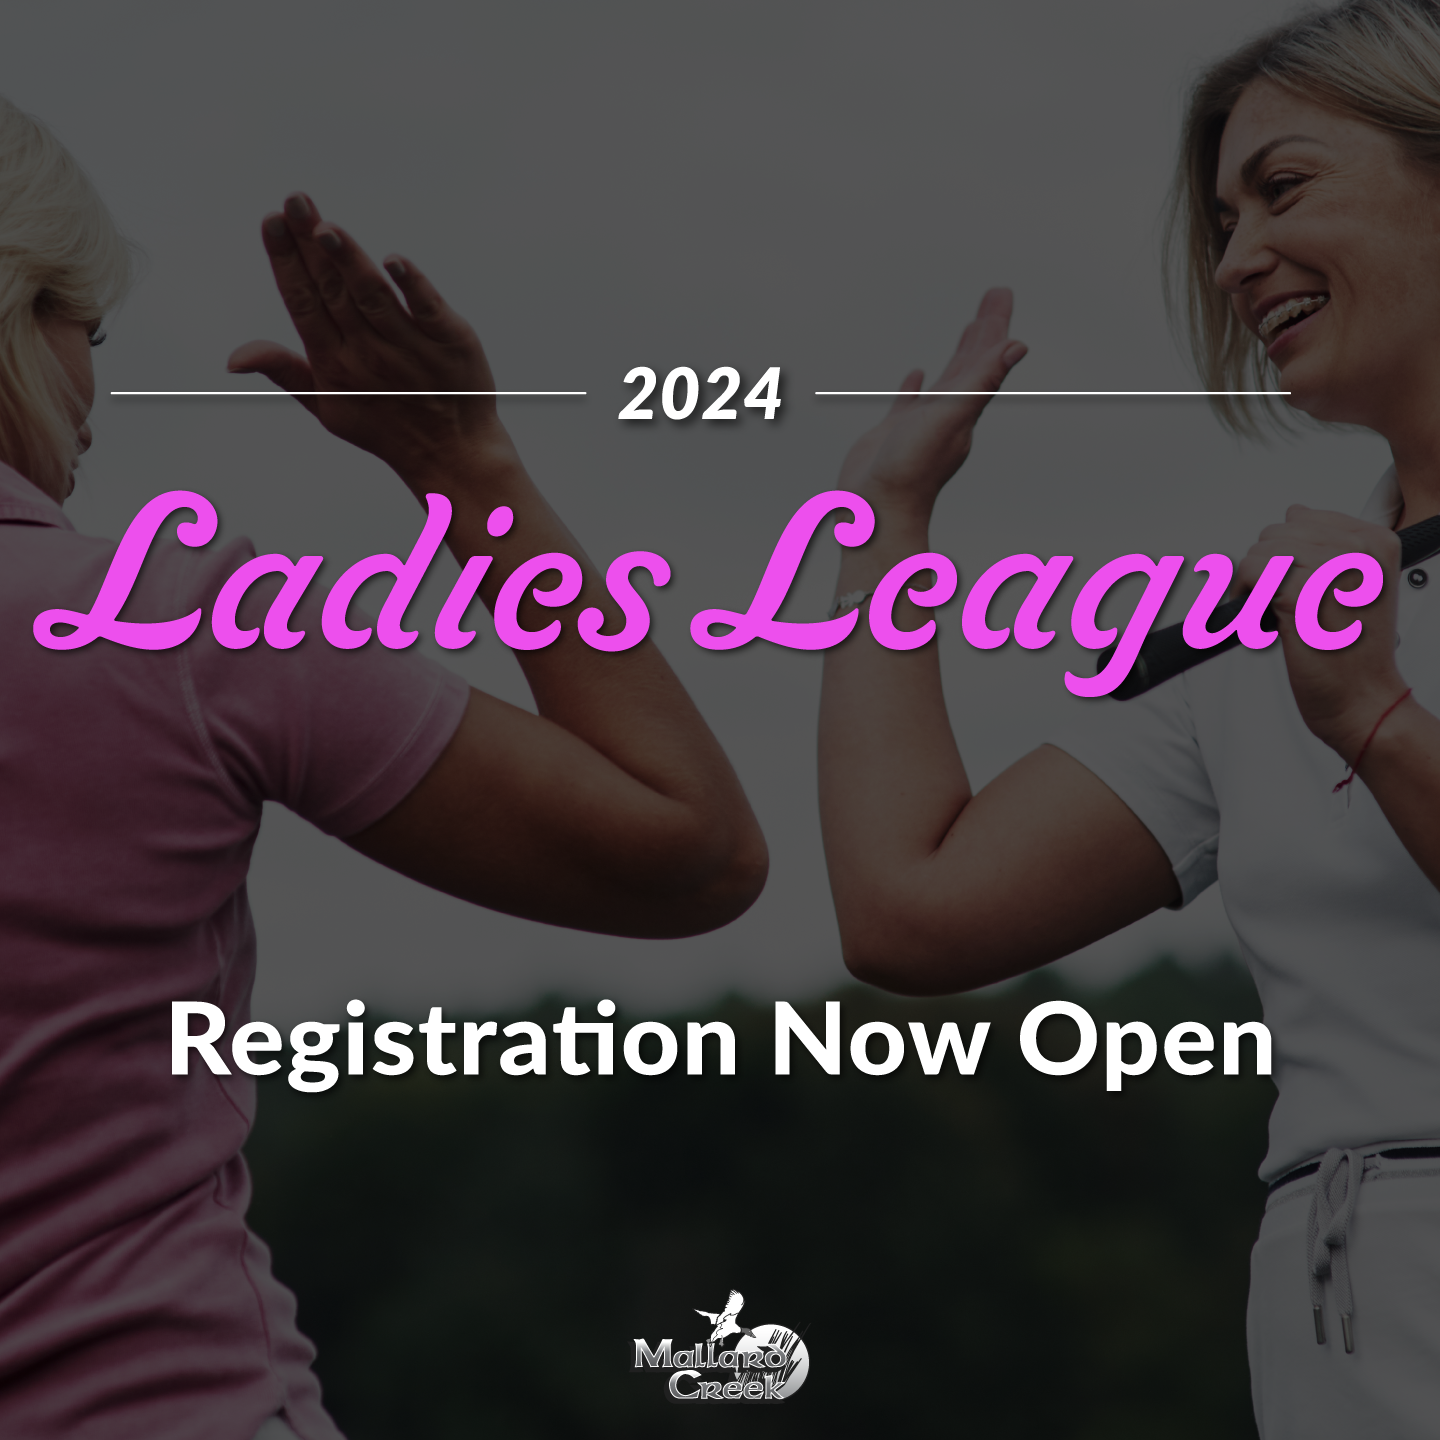 The 2024 Ladies League